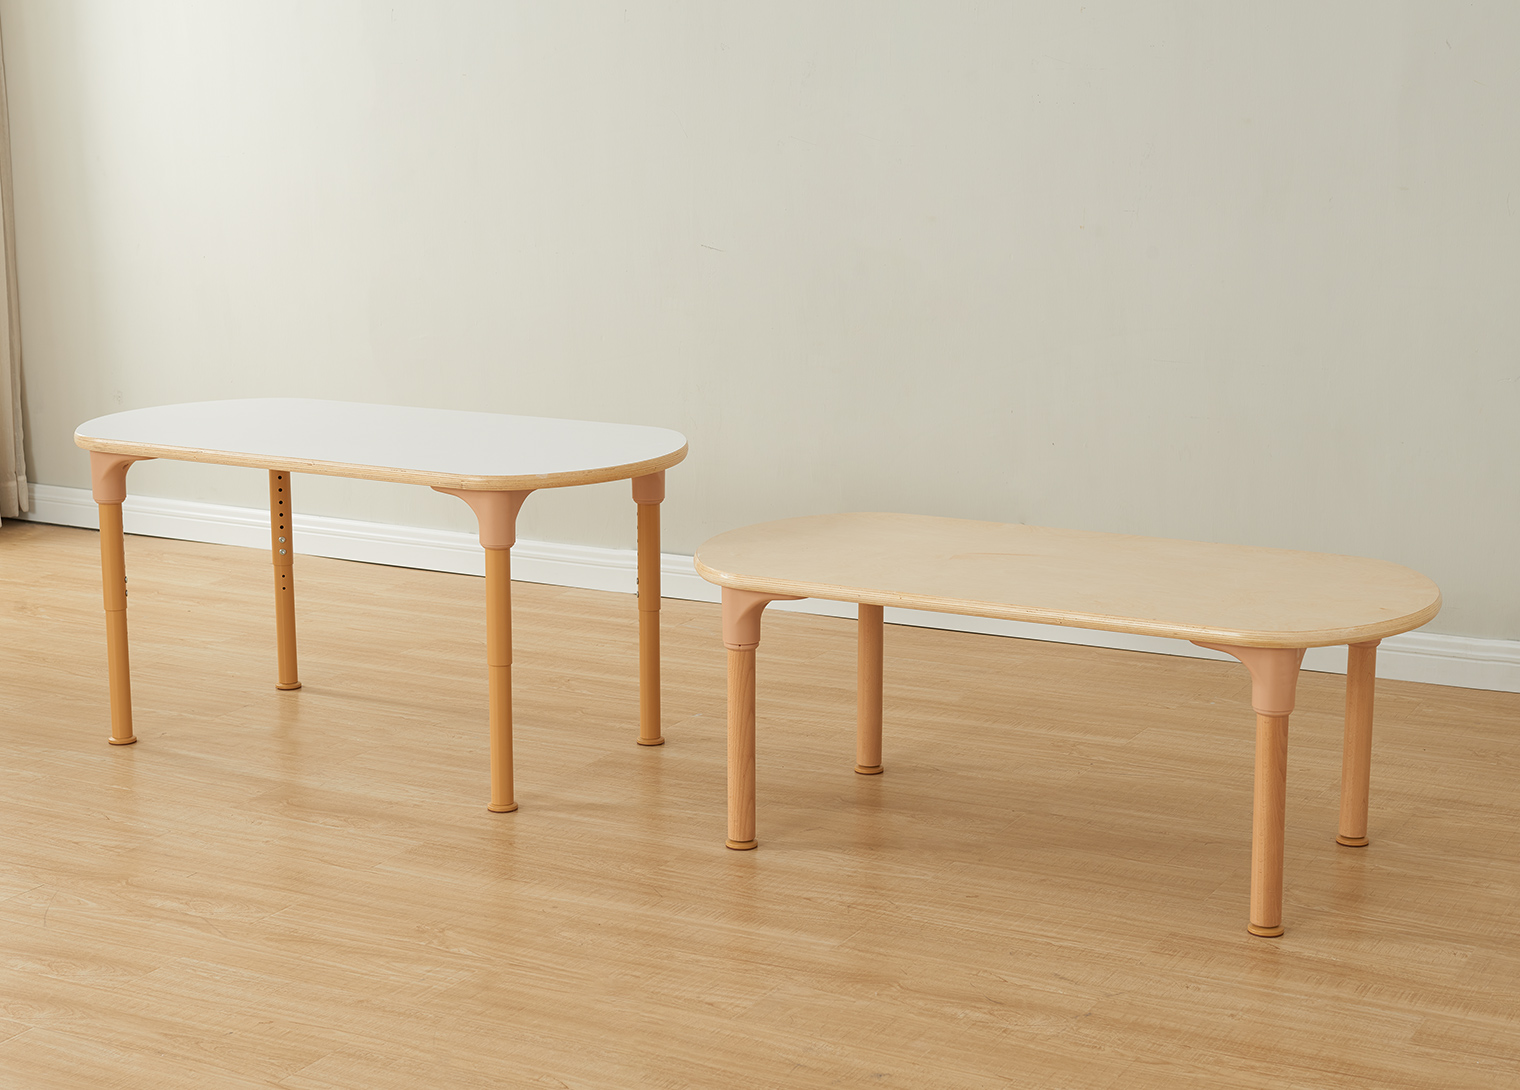 Alrik System - Adjustable Metal Oval-Shaped Table (White)